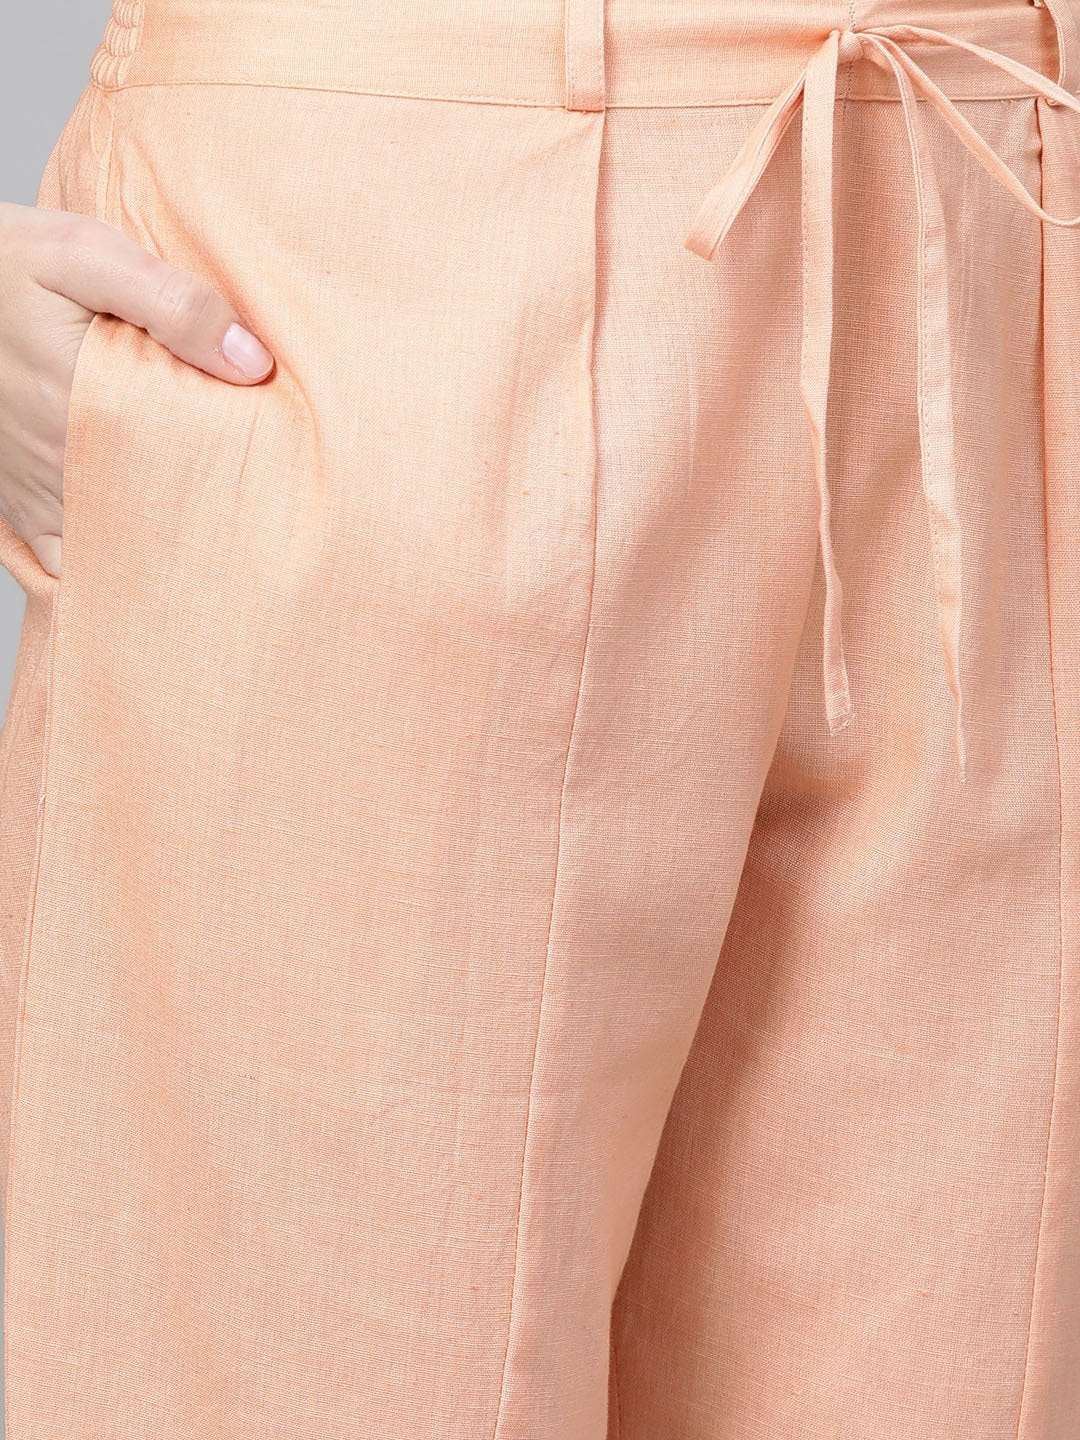 Ishin Women's Cotton Grey & Peach Printed Anarkali Kurta Trouser Set